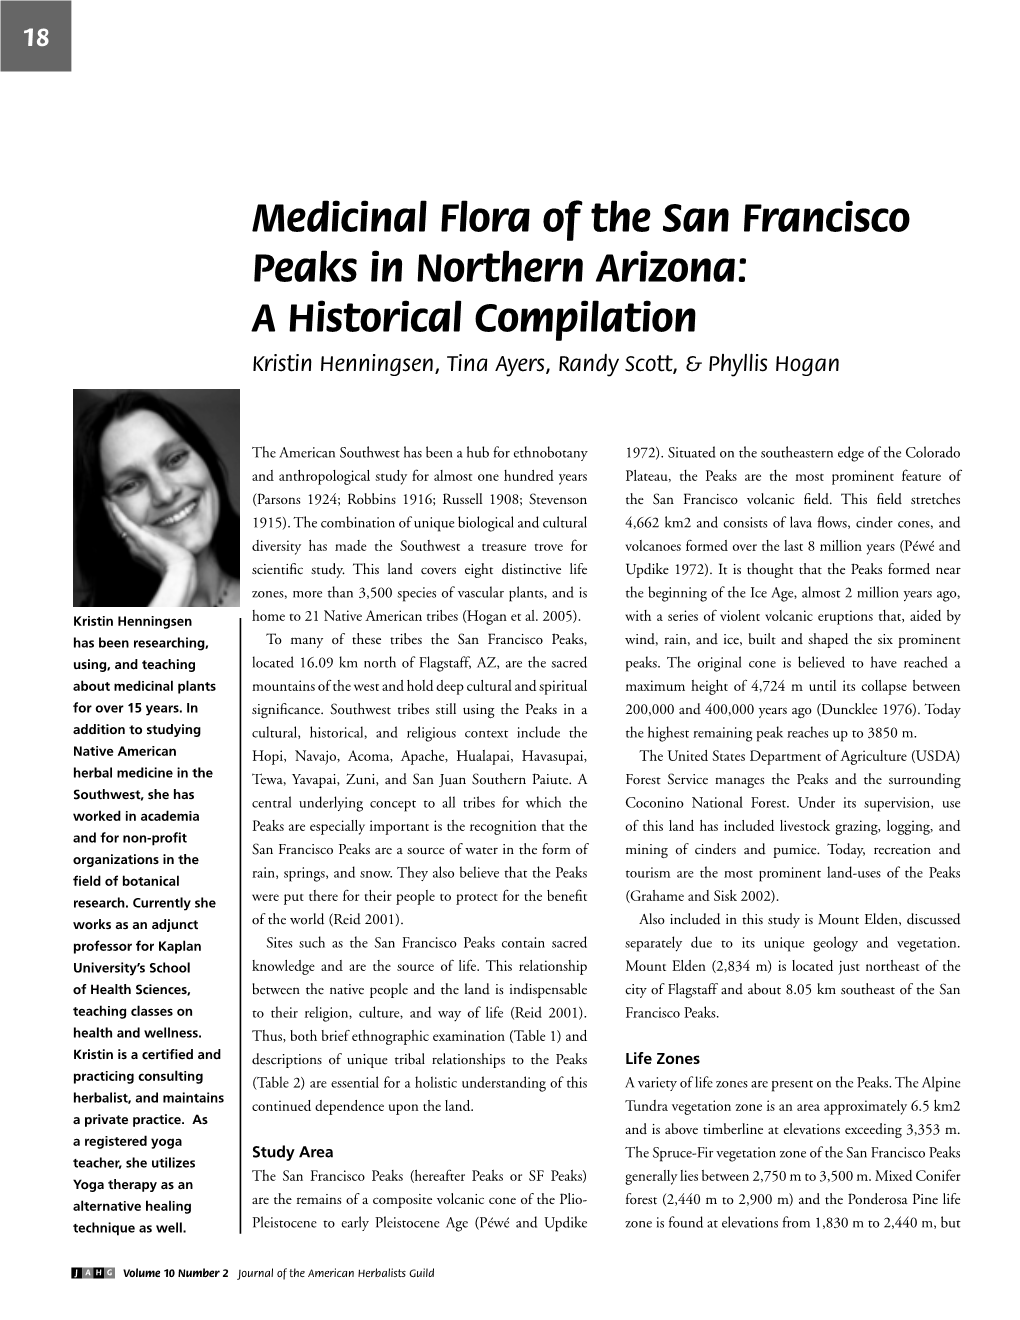 Medicinal Flora of the San Francisco Peaks in Northern Arizona: a Historical Compilation Kristin Henningsen, Tina Ayers, Randy Scott, & Phyllis Hogan